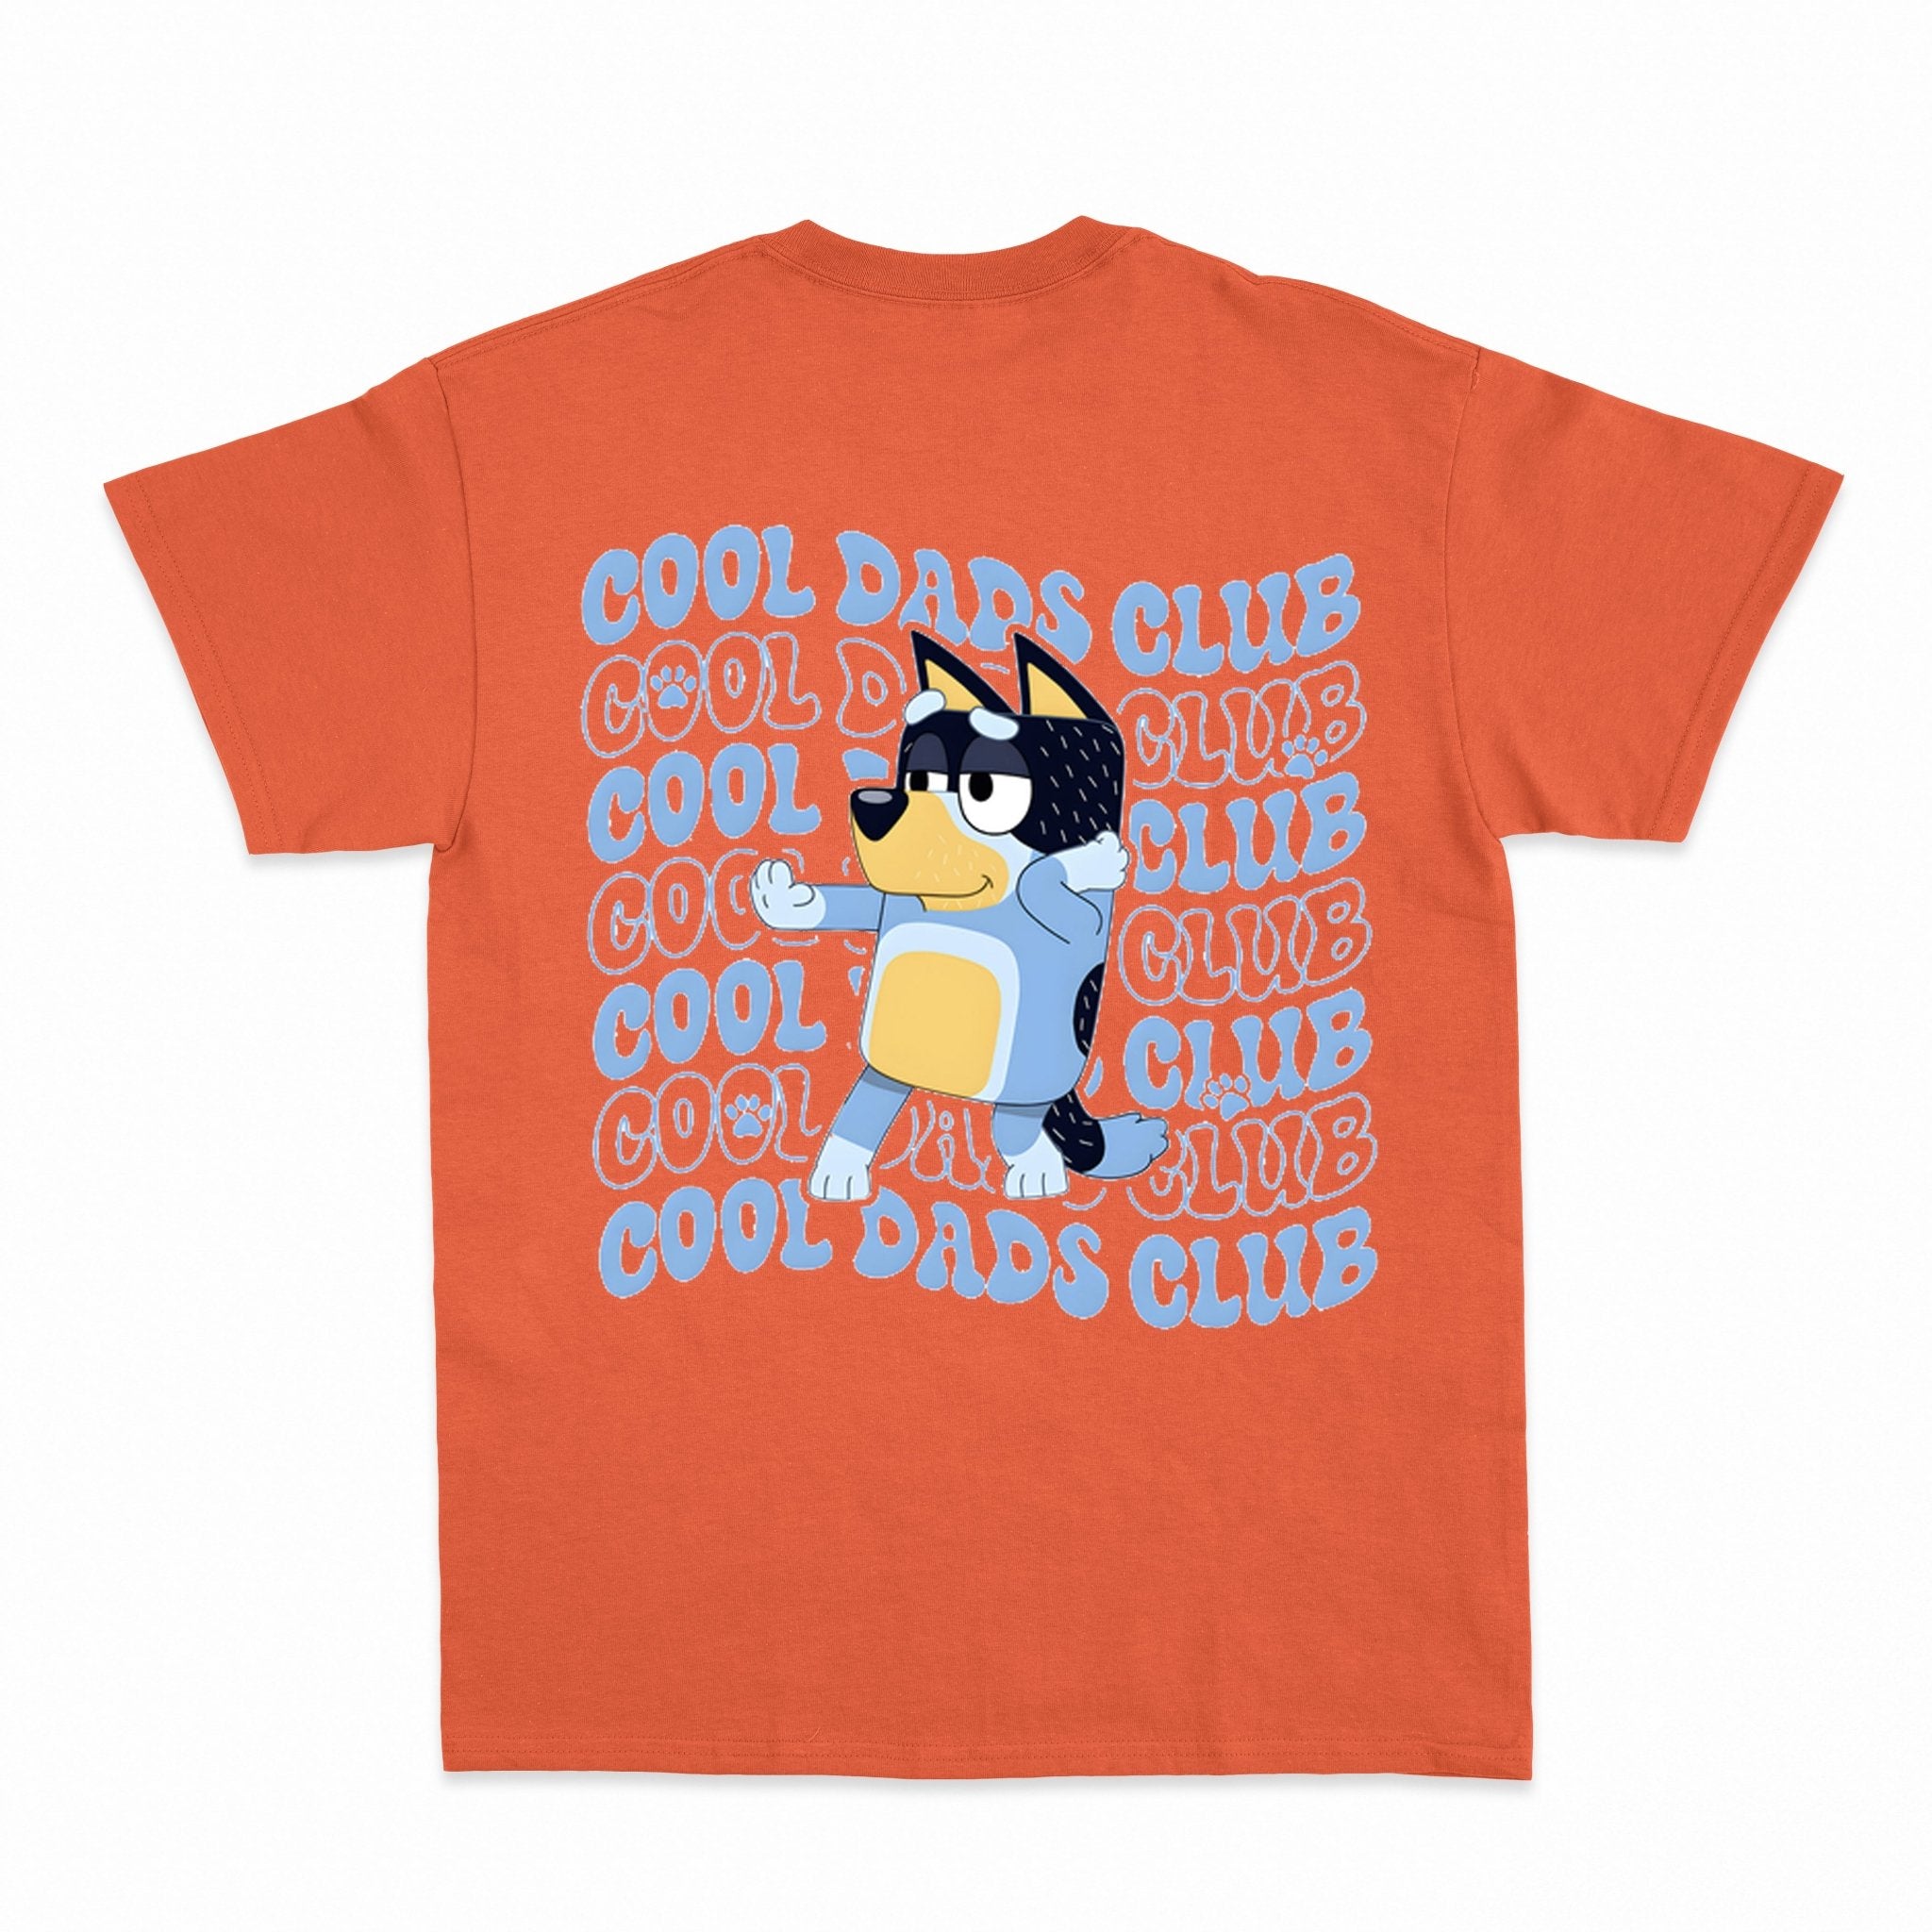 Cool Dads Club Shirt - Shapelys